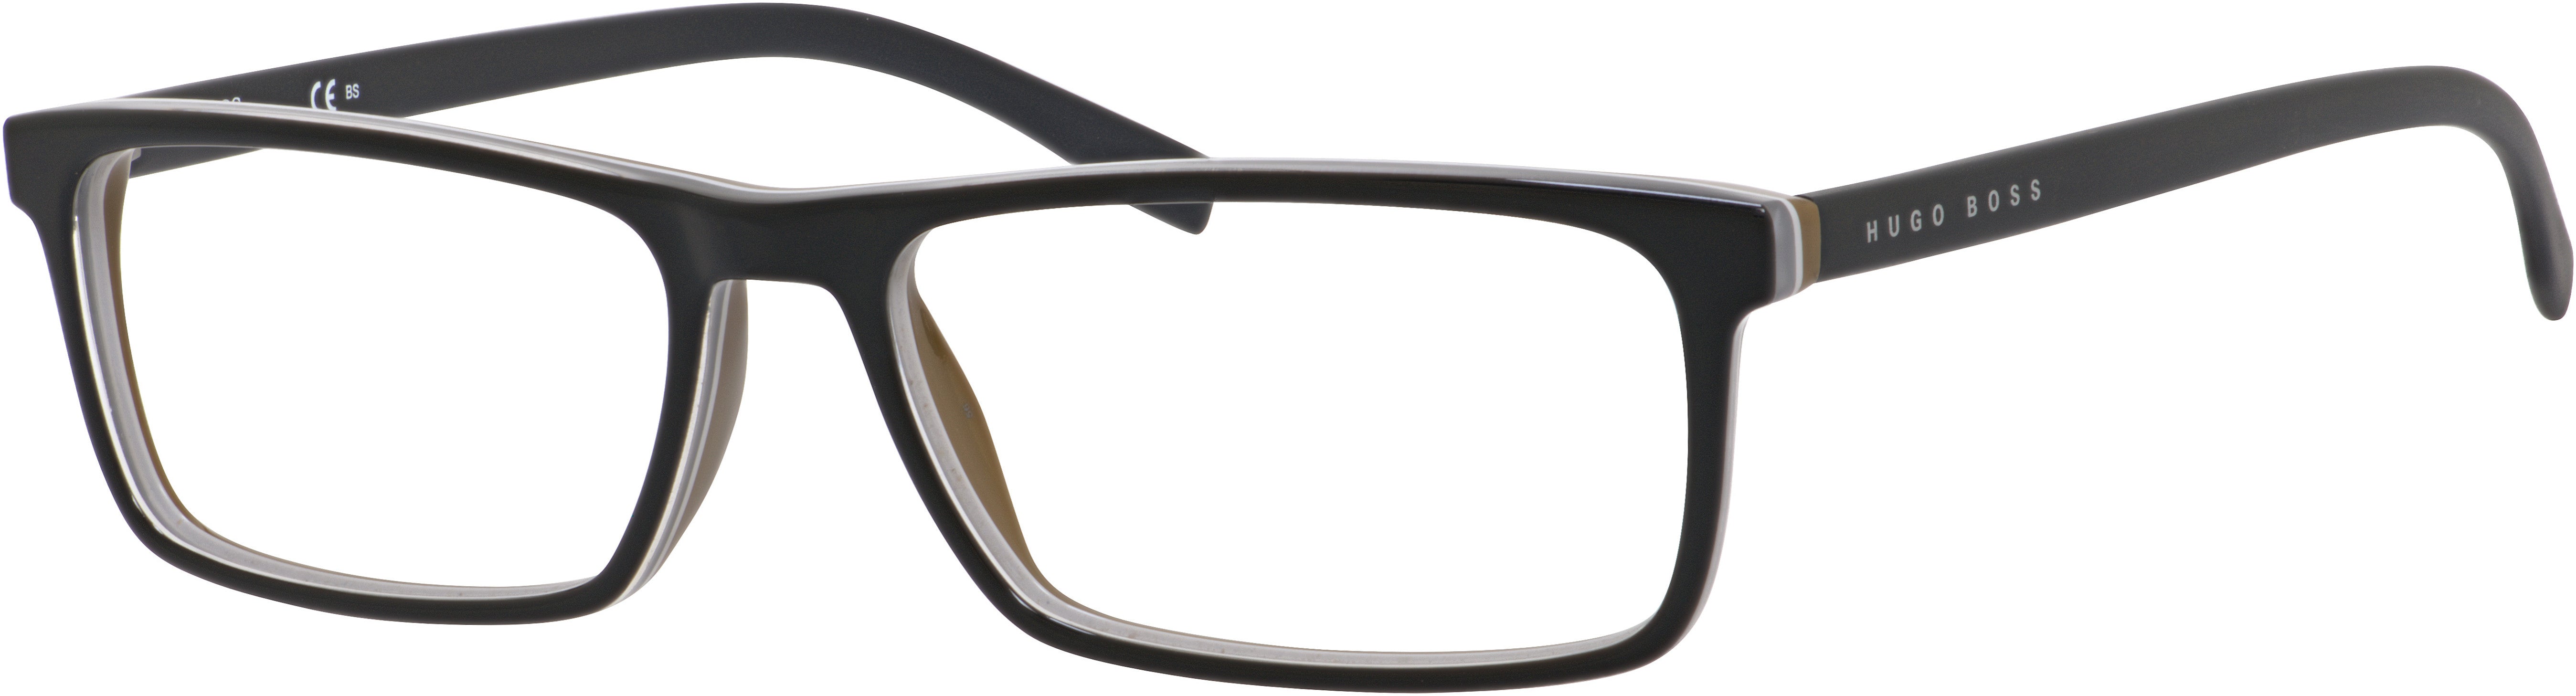 Boss (hub) Boss 0765 Rectangular Eyeglasses 0QHI-0QHI  Black (00 Demo Lens)